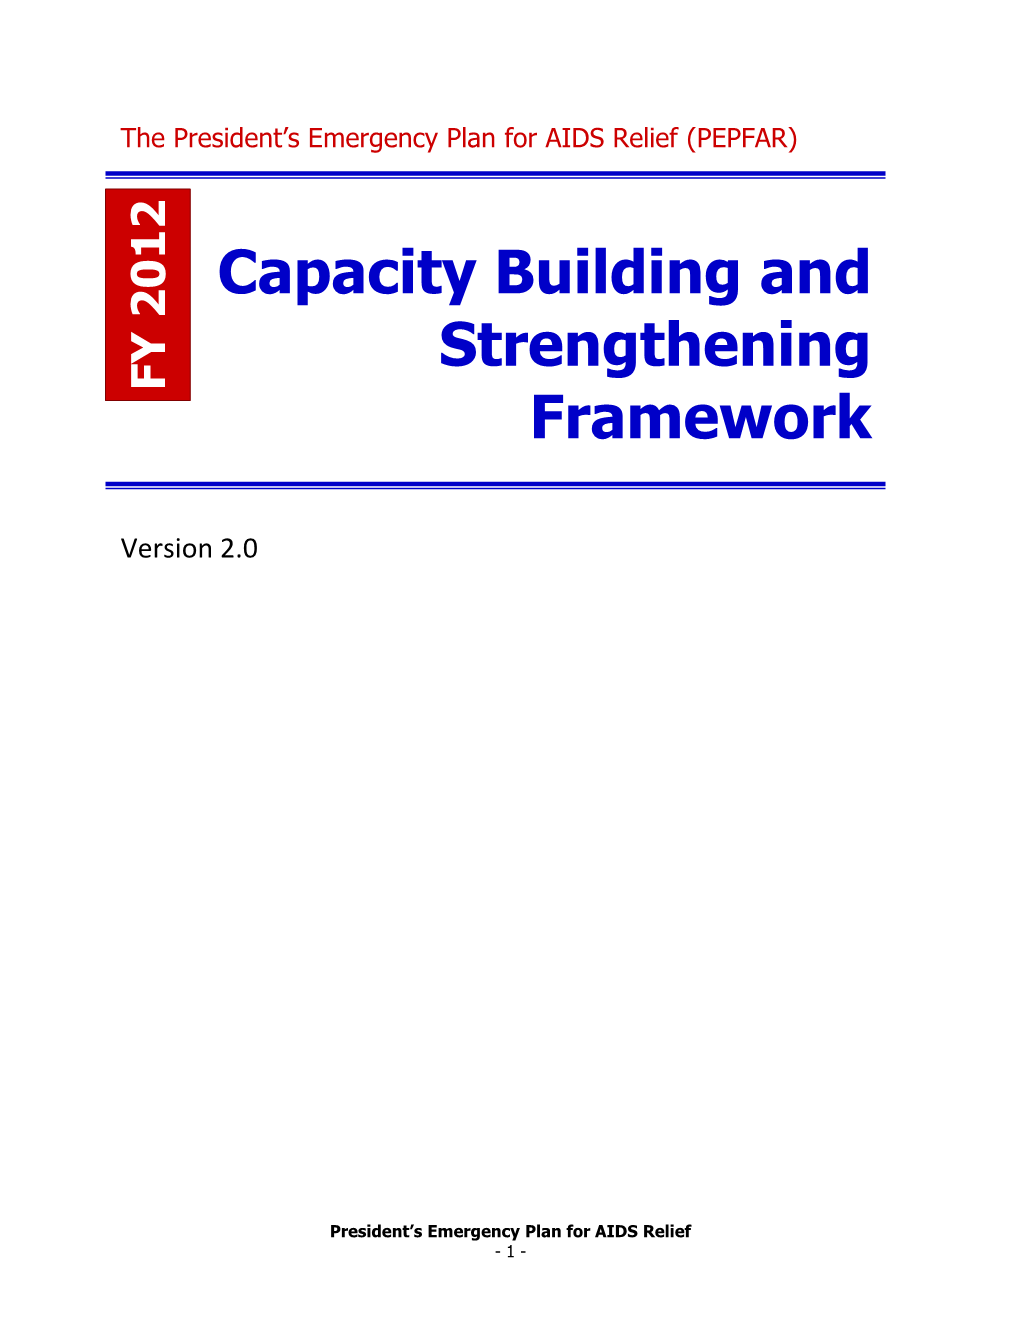 Capacity Building and Strengthening Framework